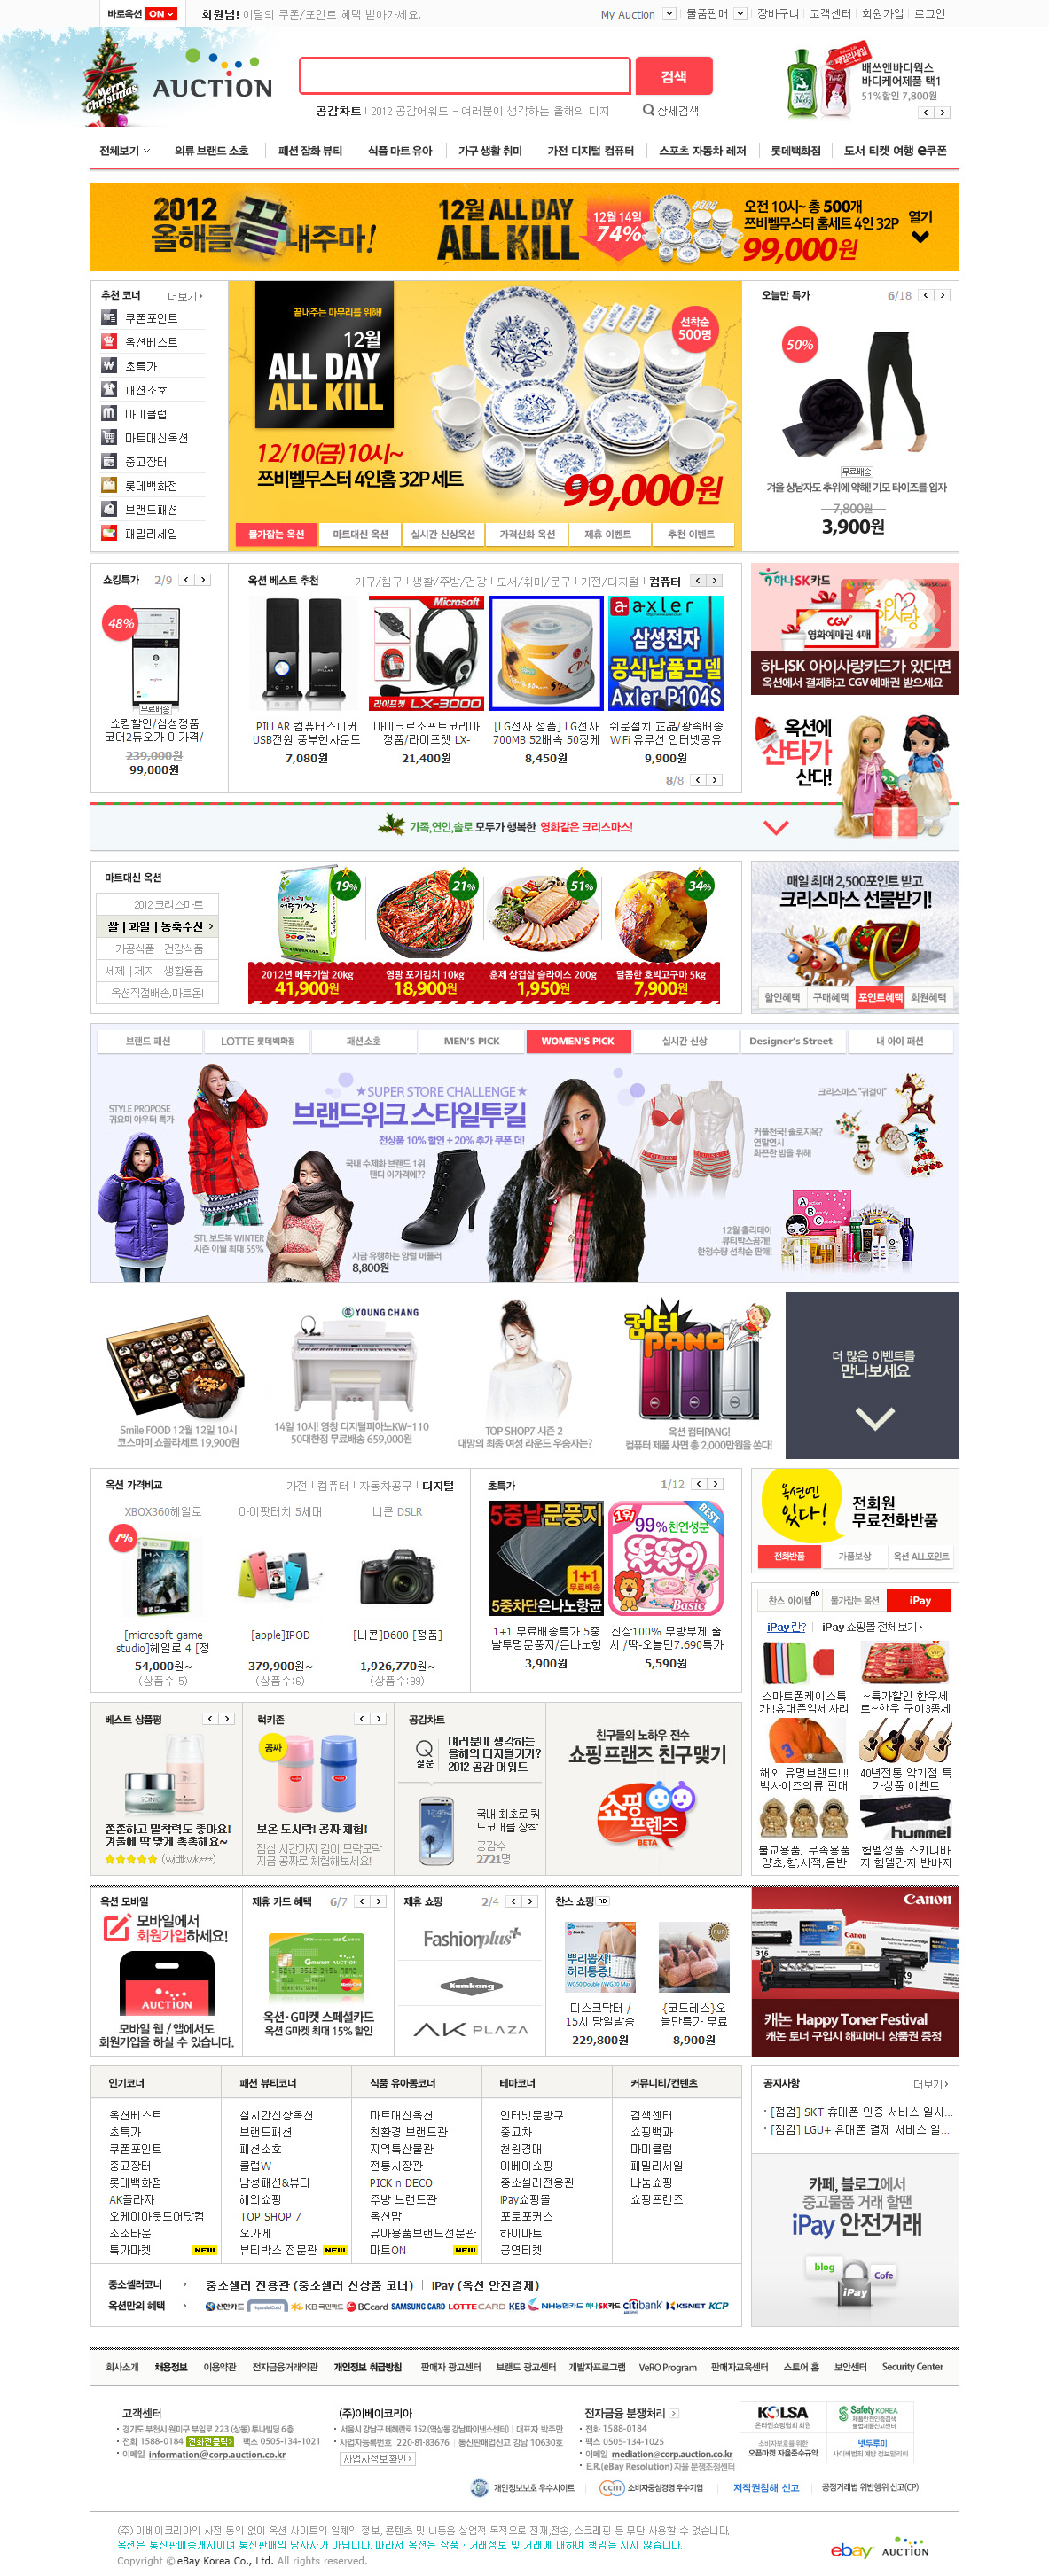 AUCTION，ebay韩国公司旗下购物网站